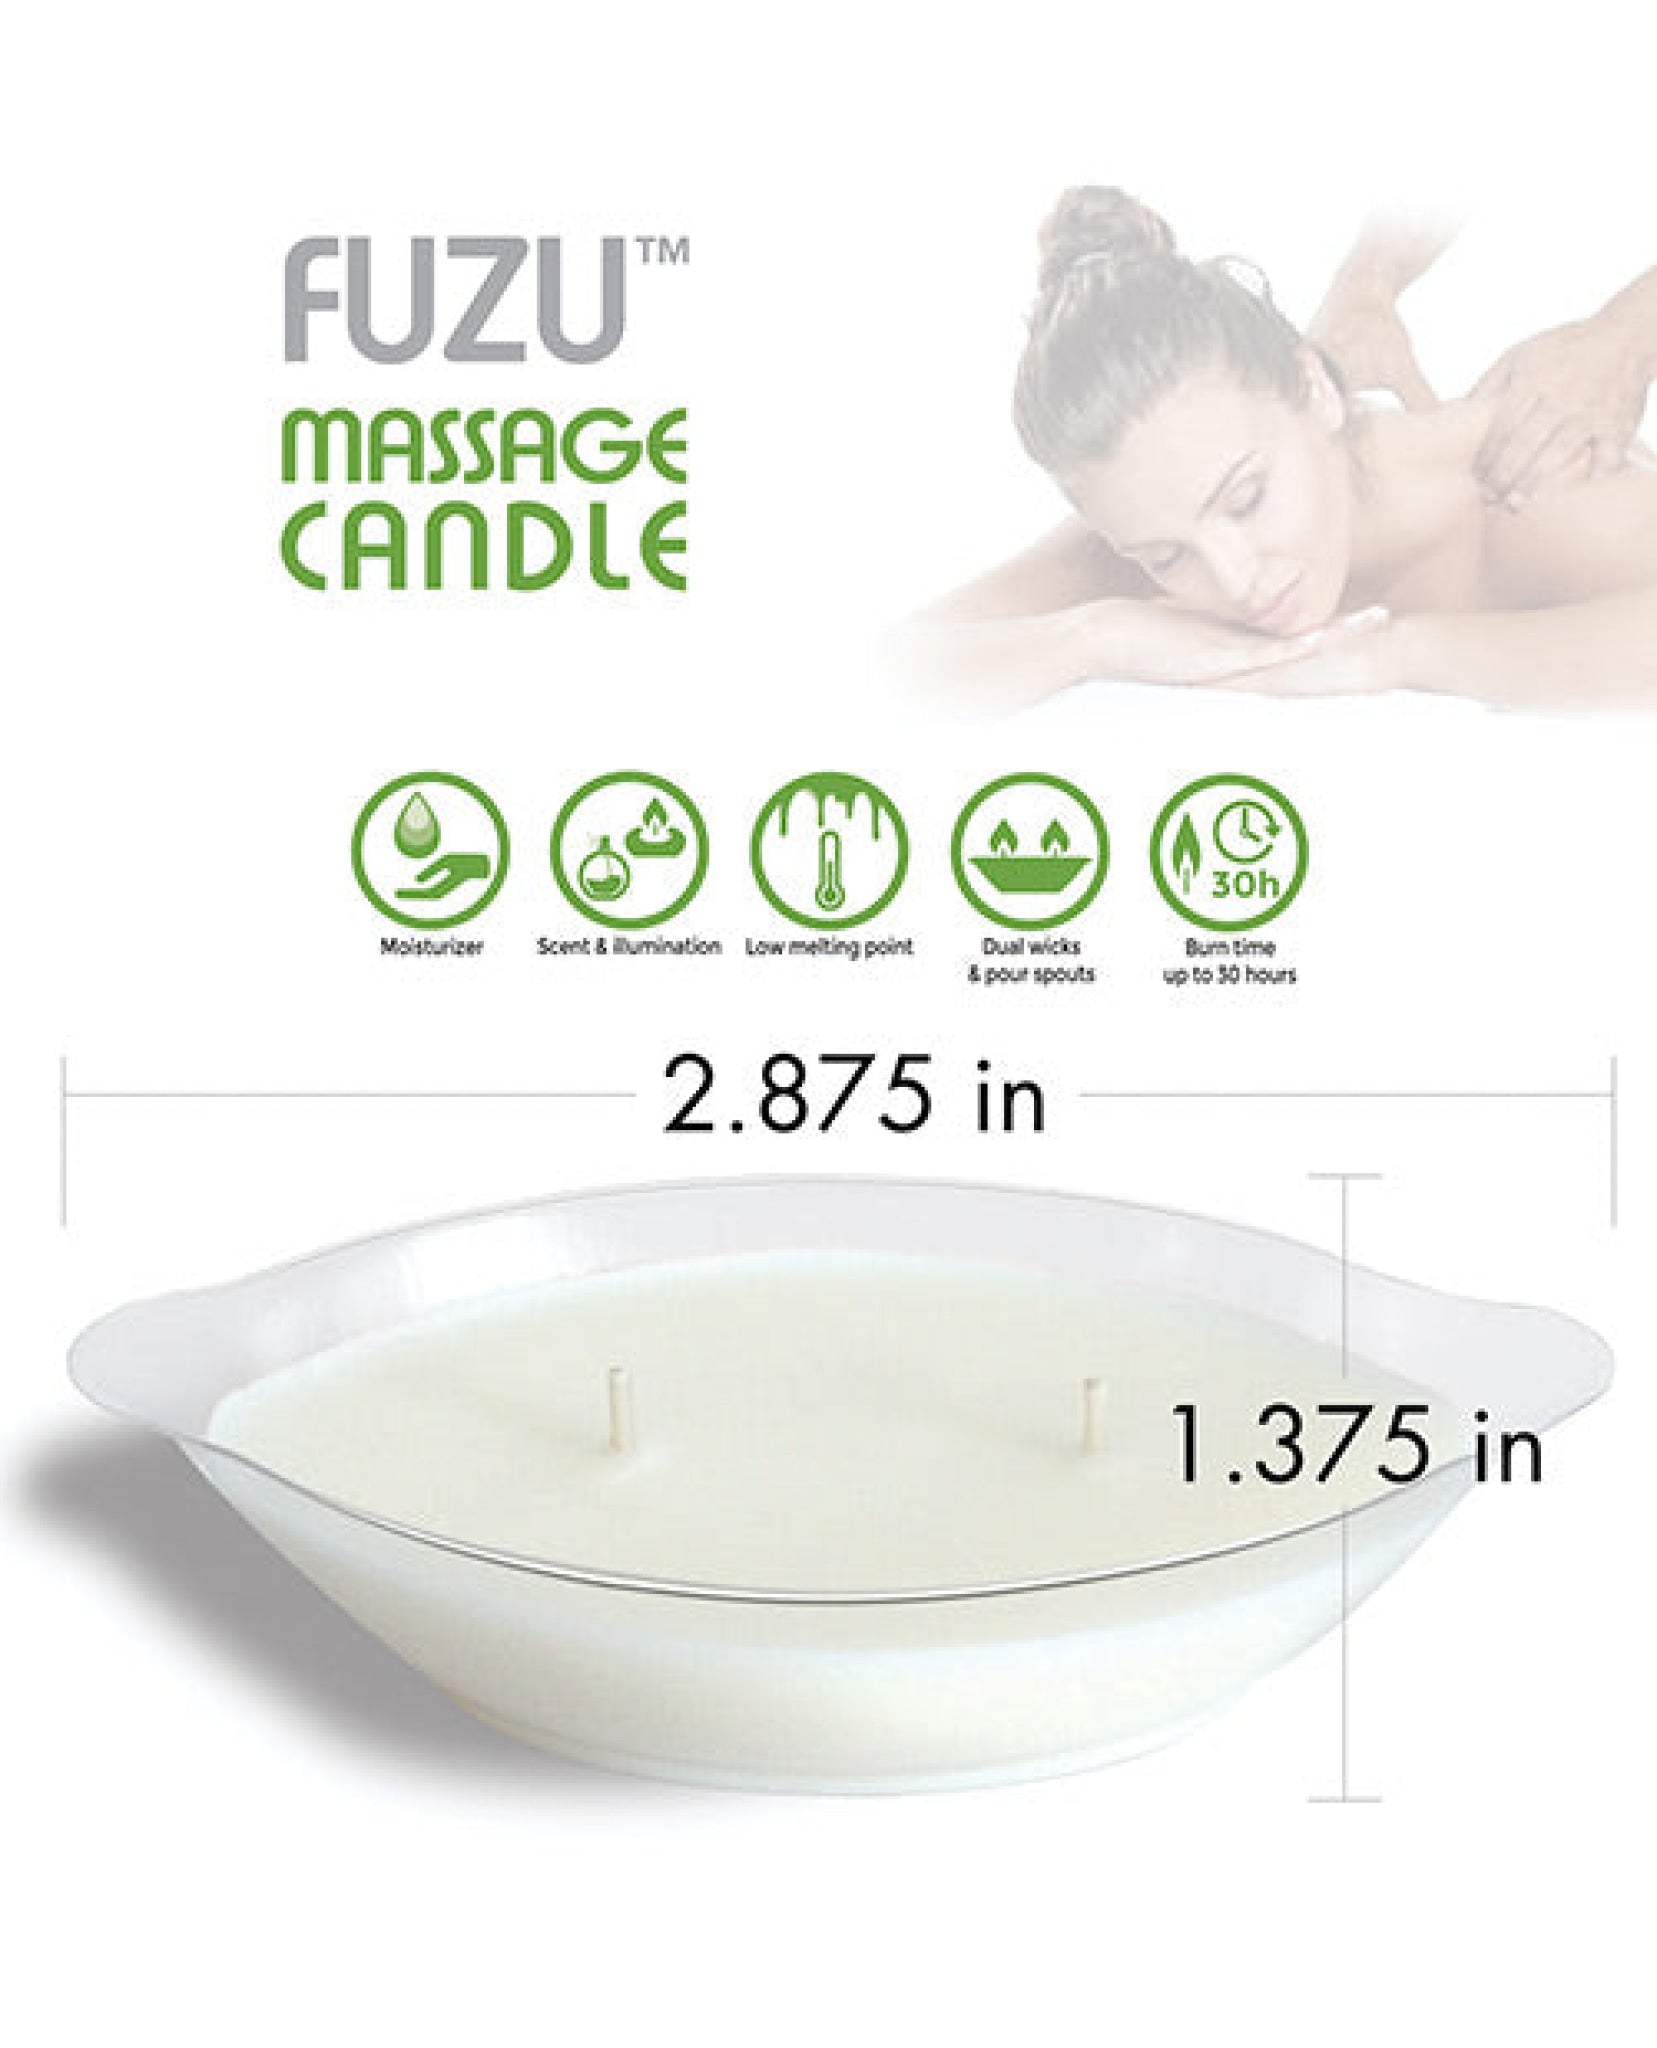 Fuzu Massage Candle - 4 Oz Doctor Love